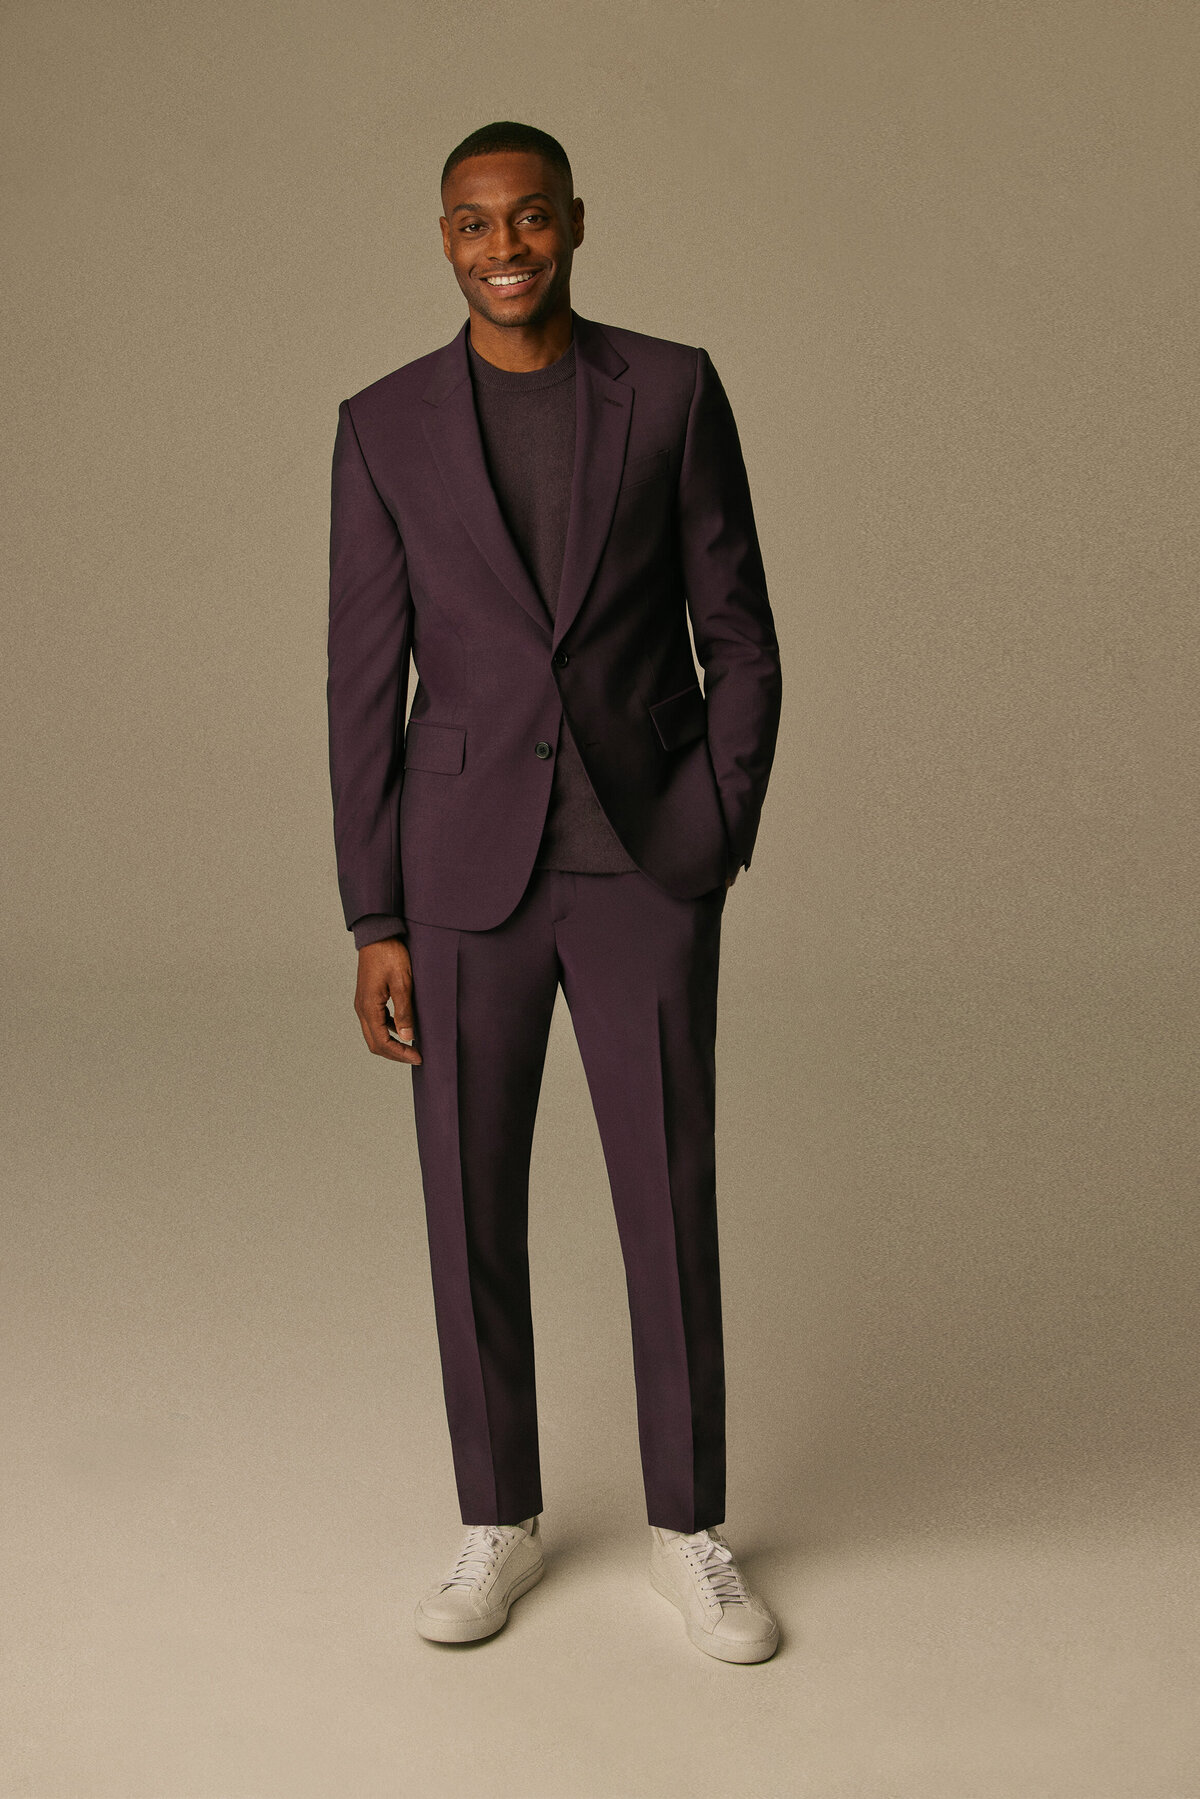 men’s-style-classic-fashion-purple-suit-personal-shopping-fashion-stylist-raina-silberstein